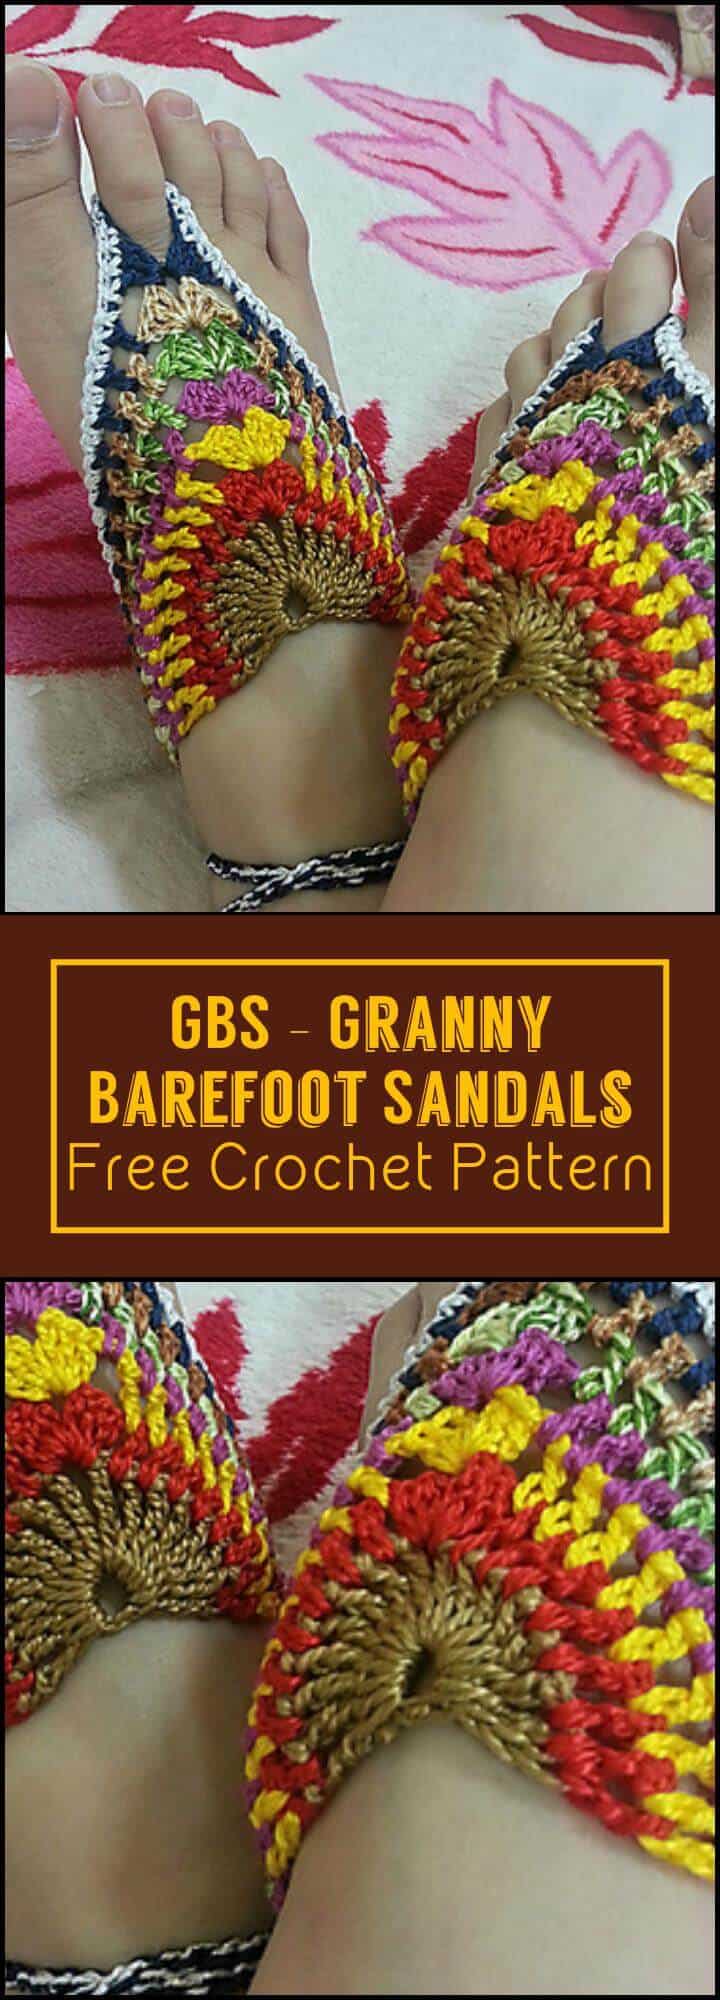 GBS - Granny Barefoot Sandals Free Crochet Pattern